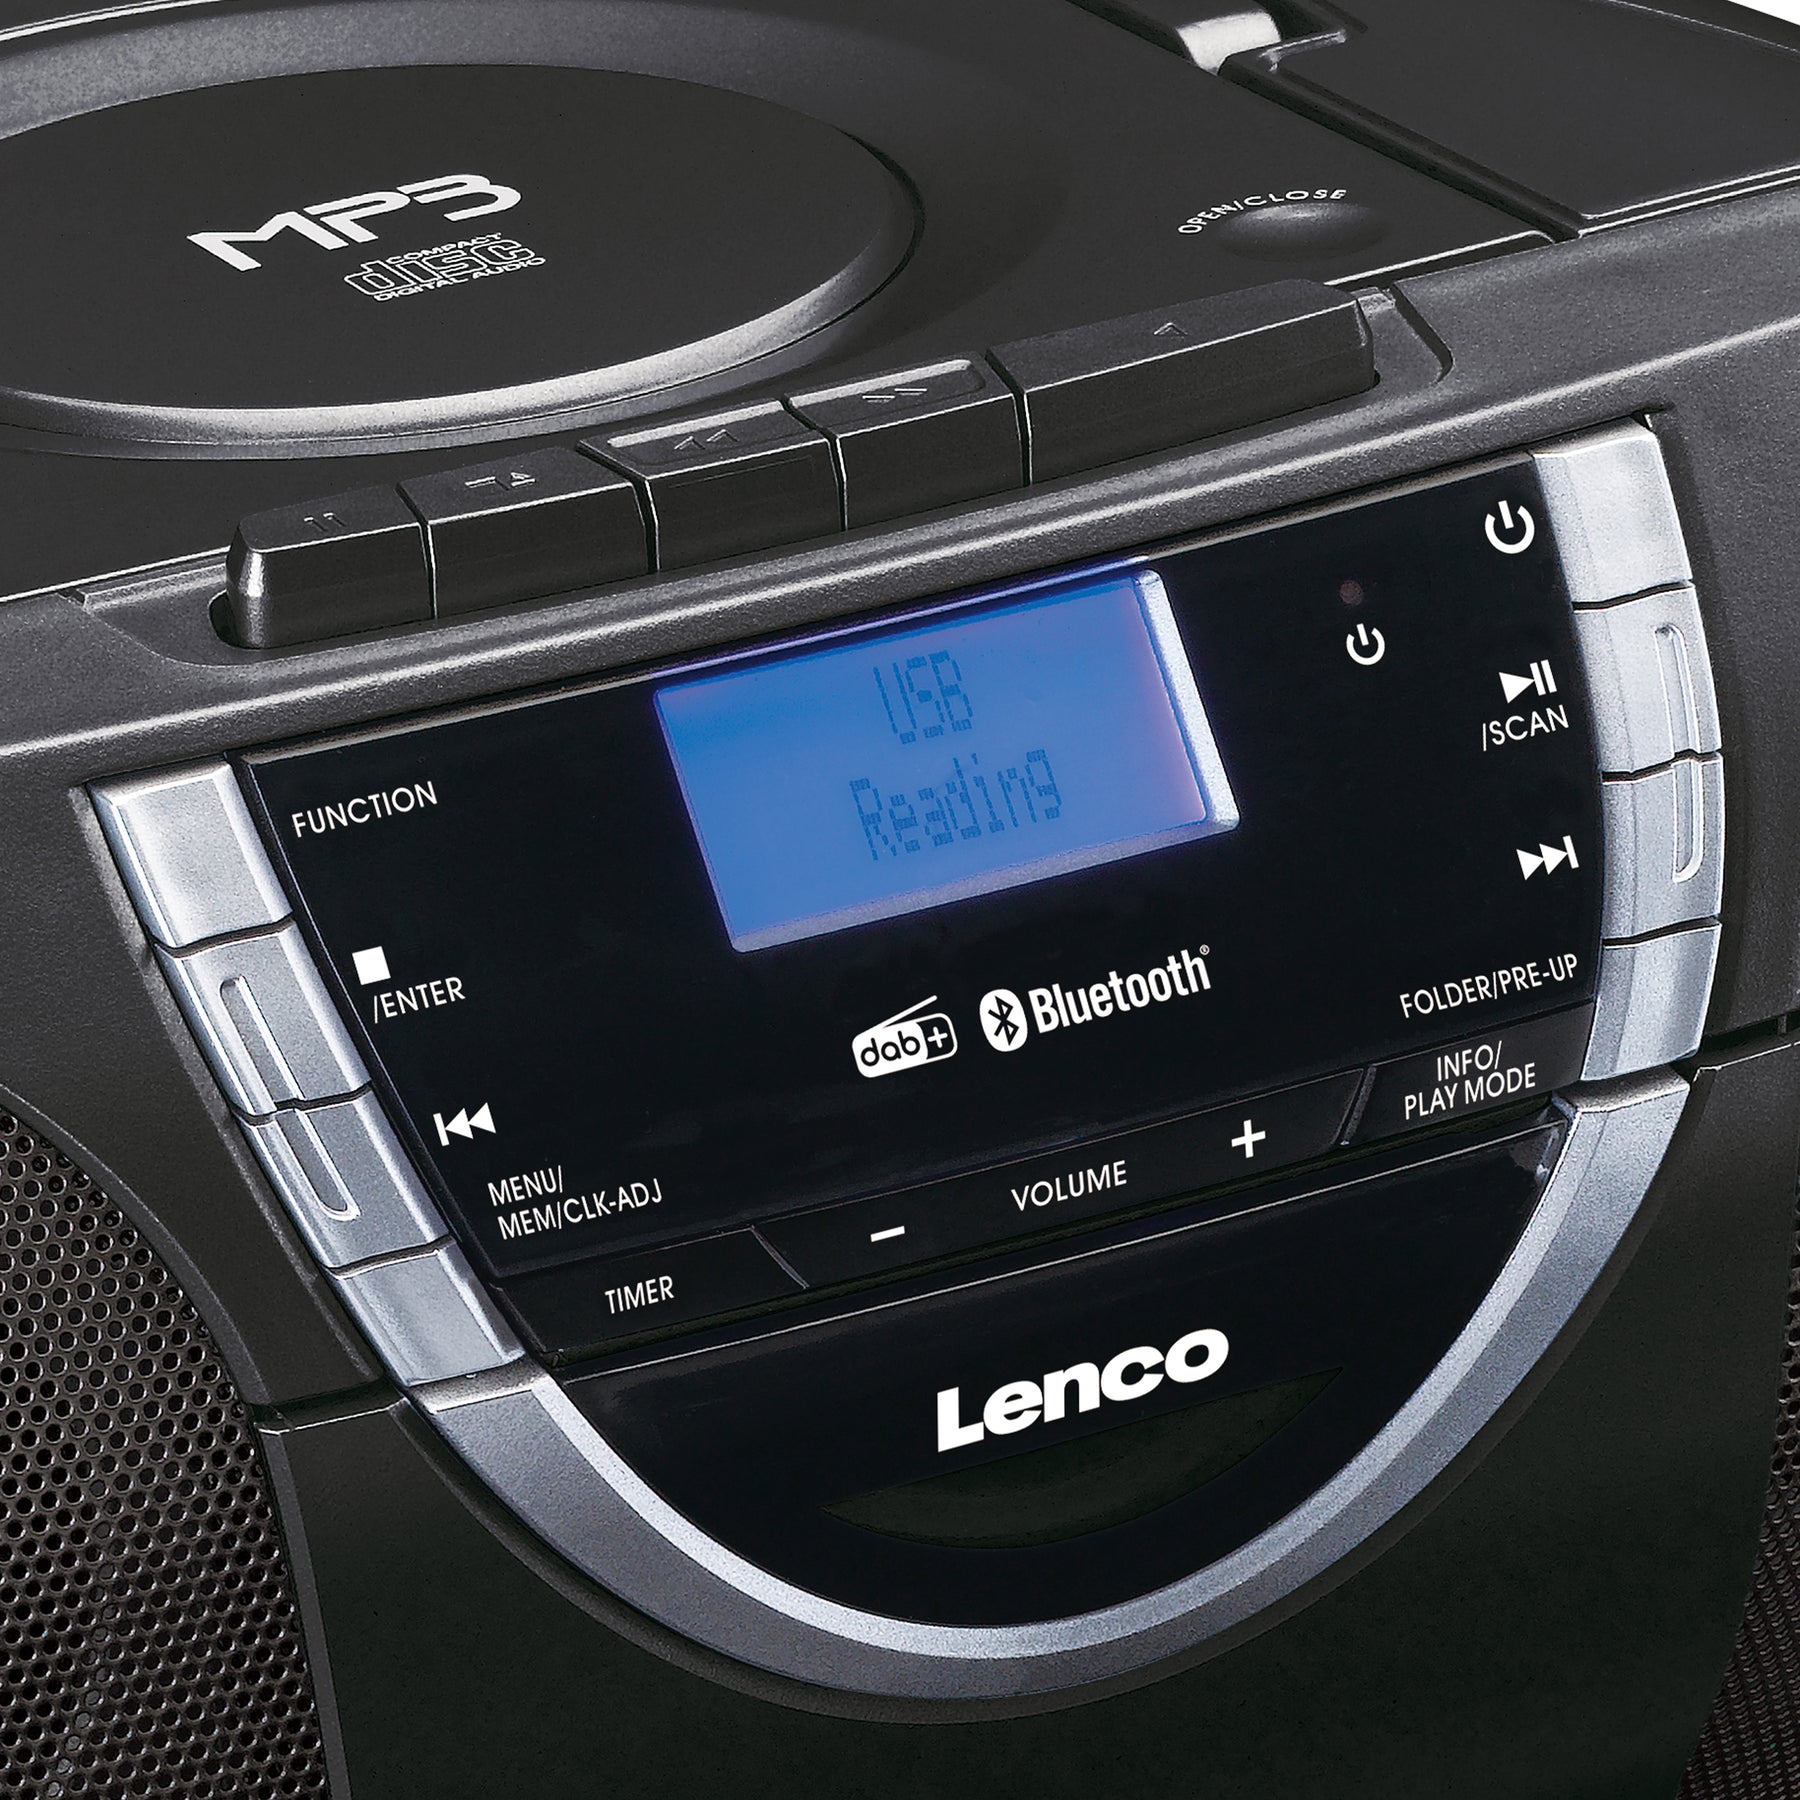 LENCO SCD-6900BK - Boombox with DAB+, FM radio and CD/ MP3 player - Bl –  Lenco-Catalog